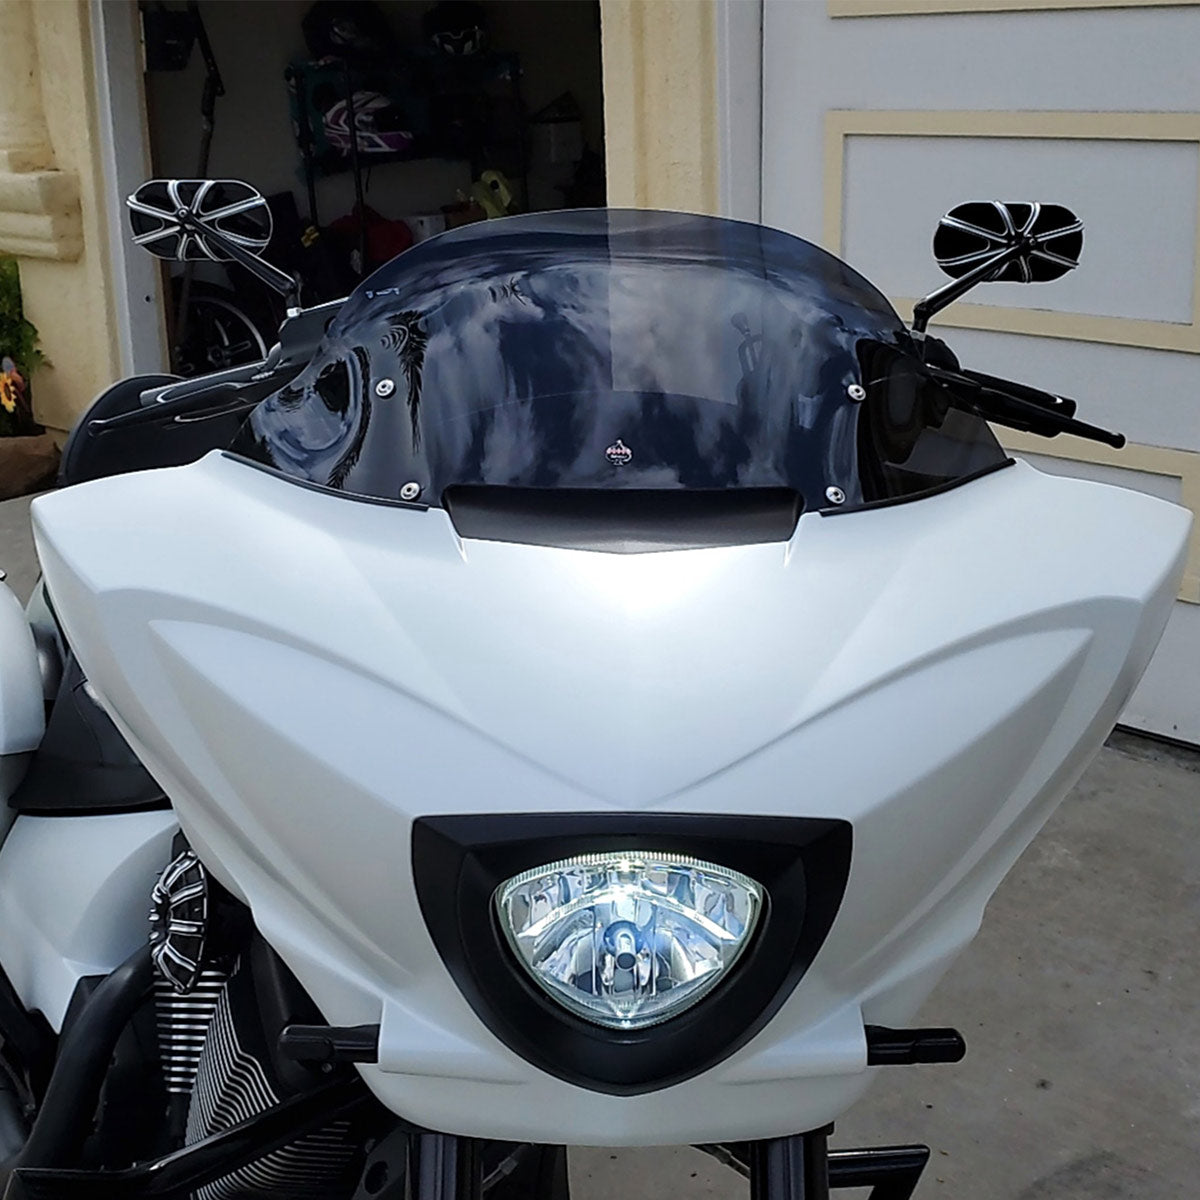 11" Dark Smoke Flare™ Windshield For Victory® Cross motorcycle models